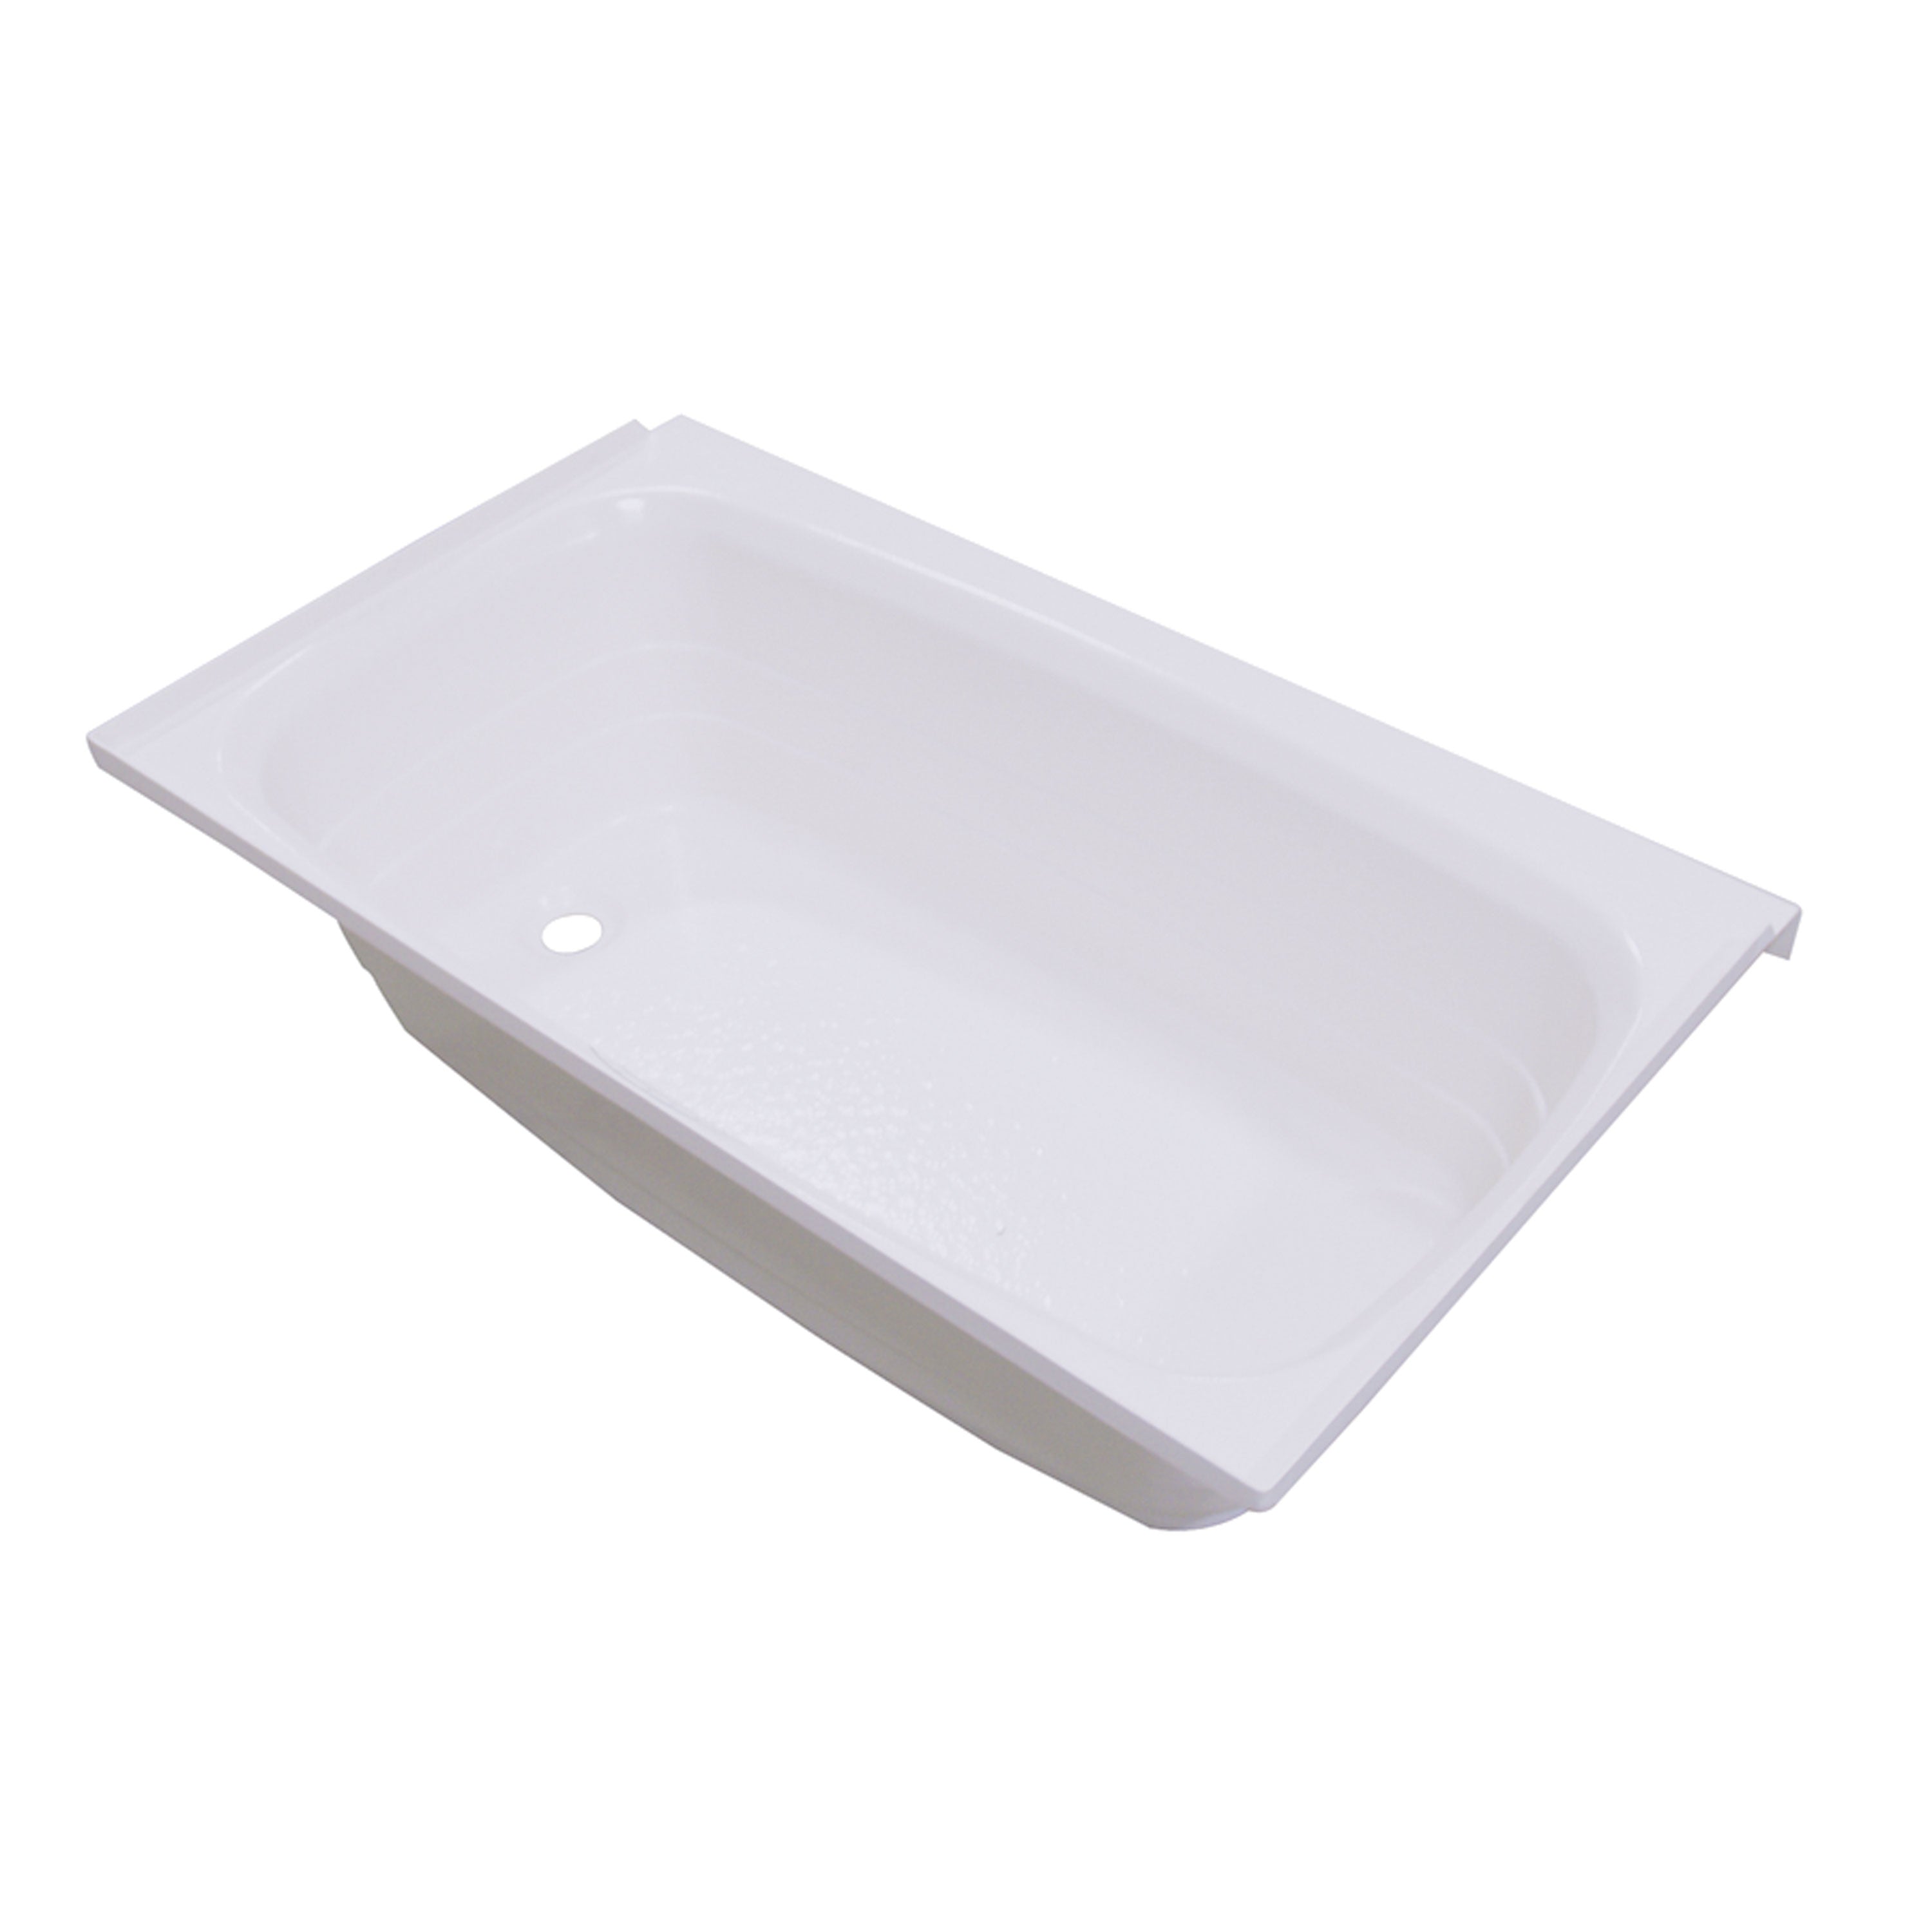 Lippert 209673 ABS Acrylic Bathtub with Left Drain - 24" x 40", White